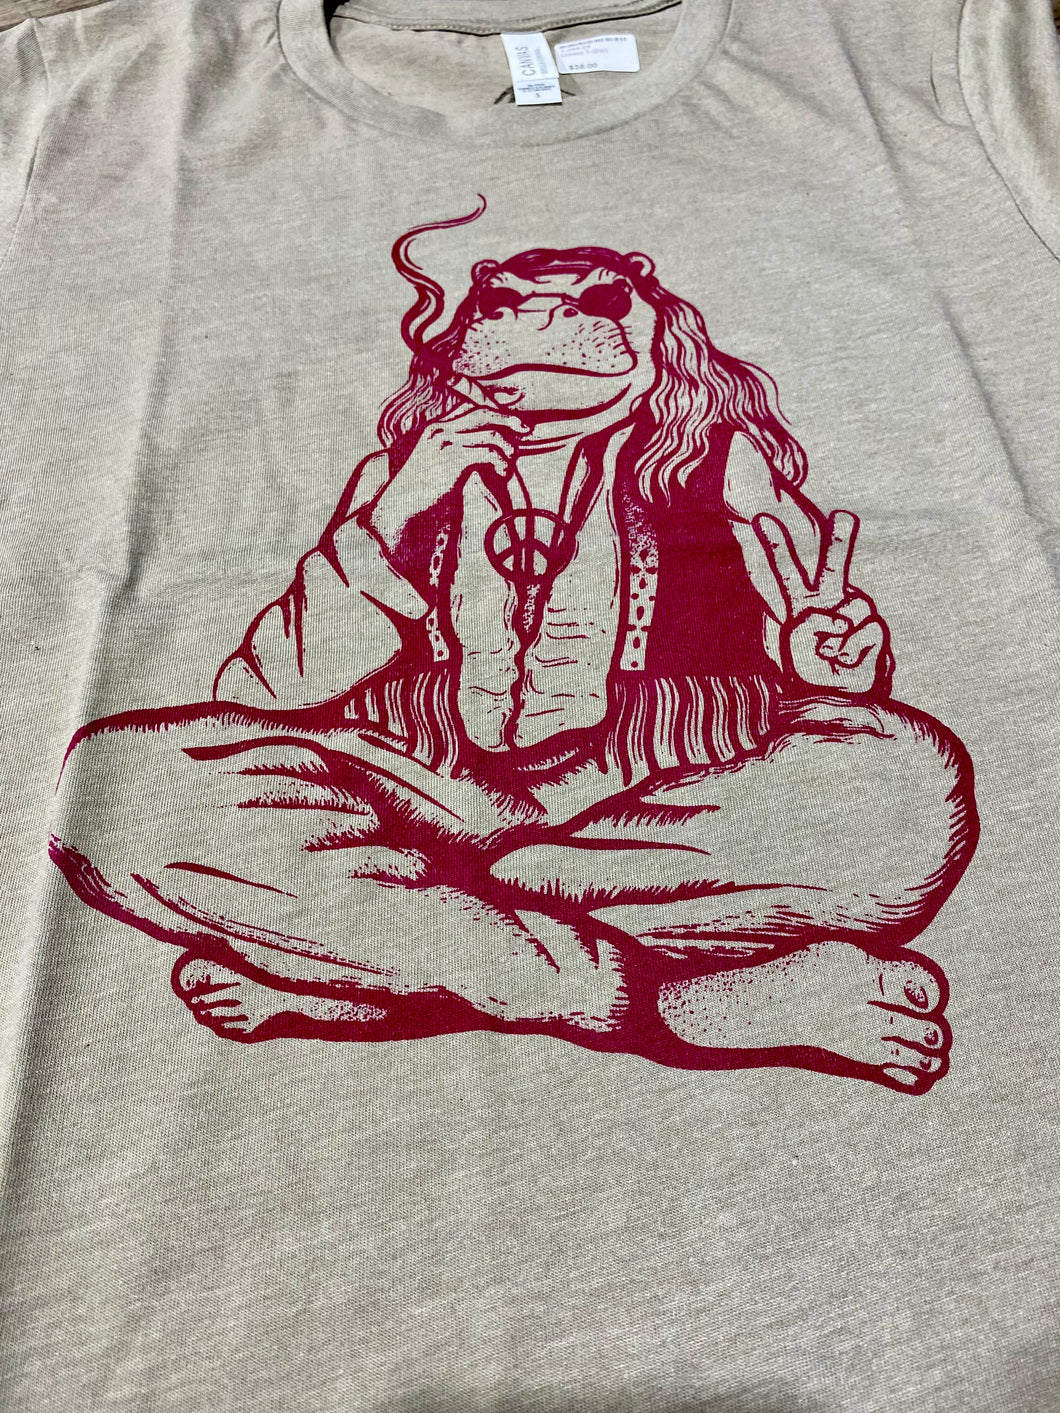 Hippie-potomus  t shirt